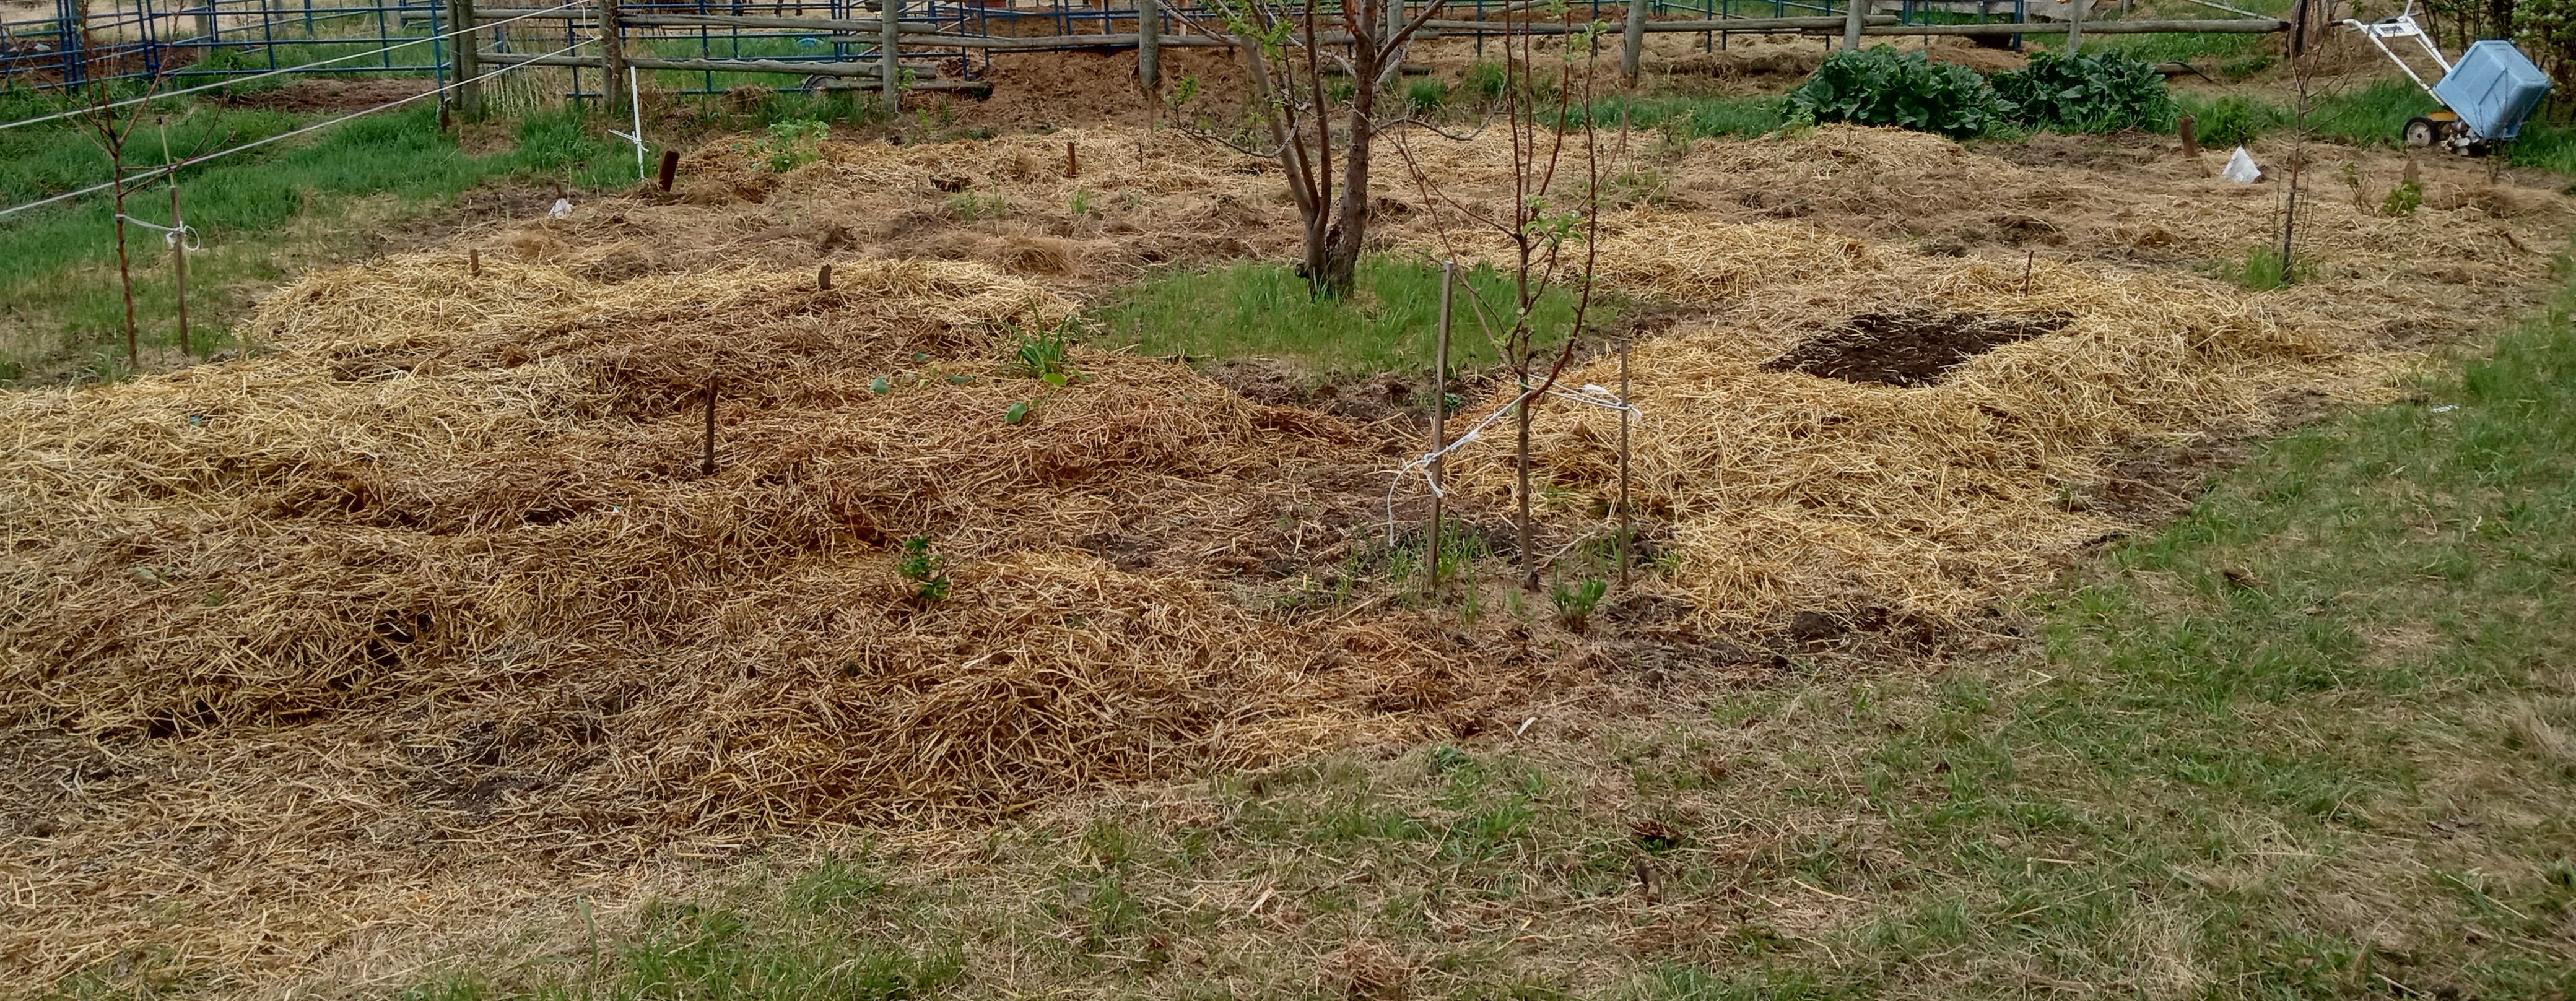 Food forest orchard garden - mulching lasagna beds